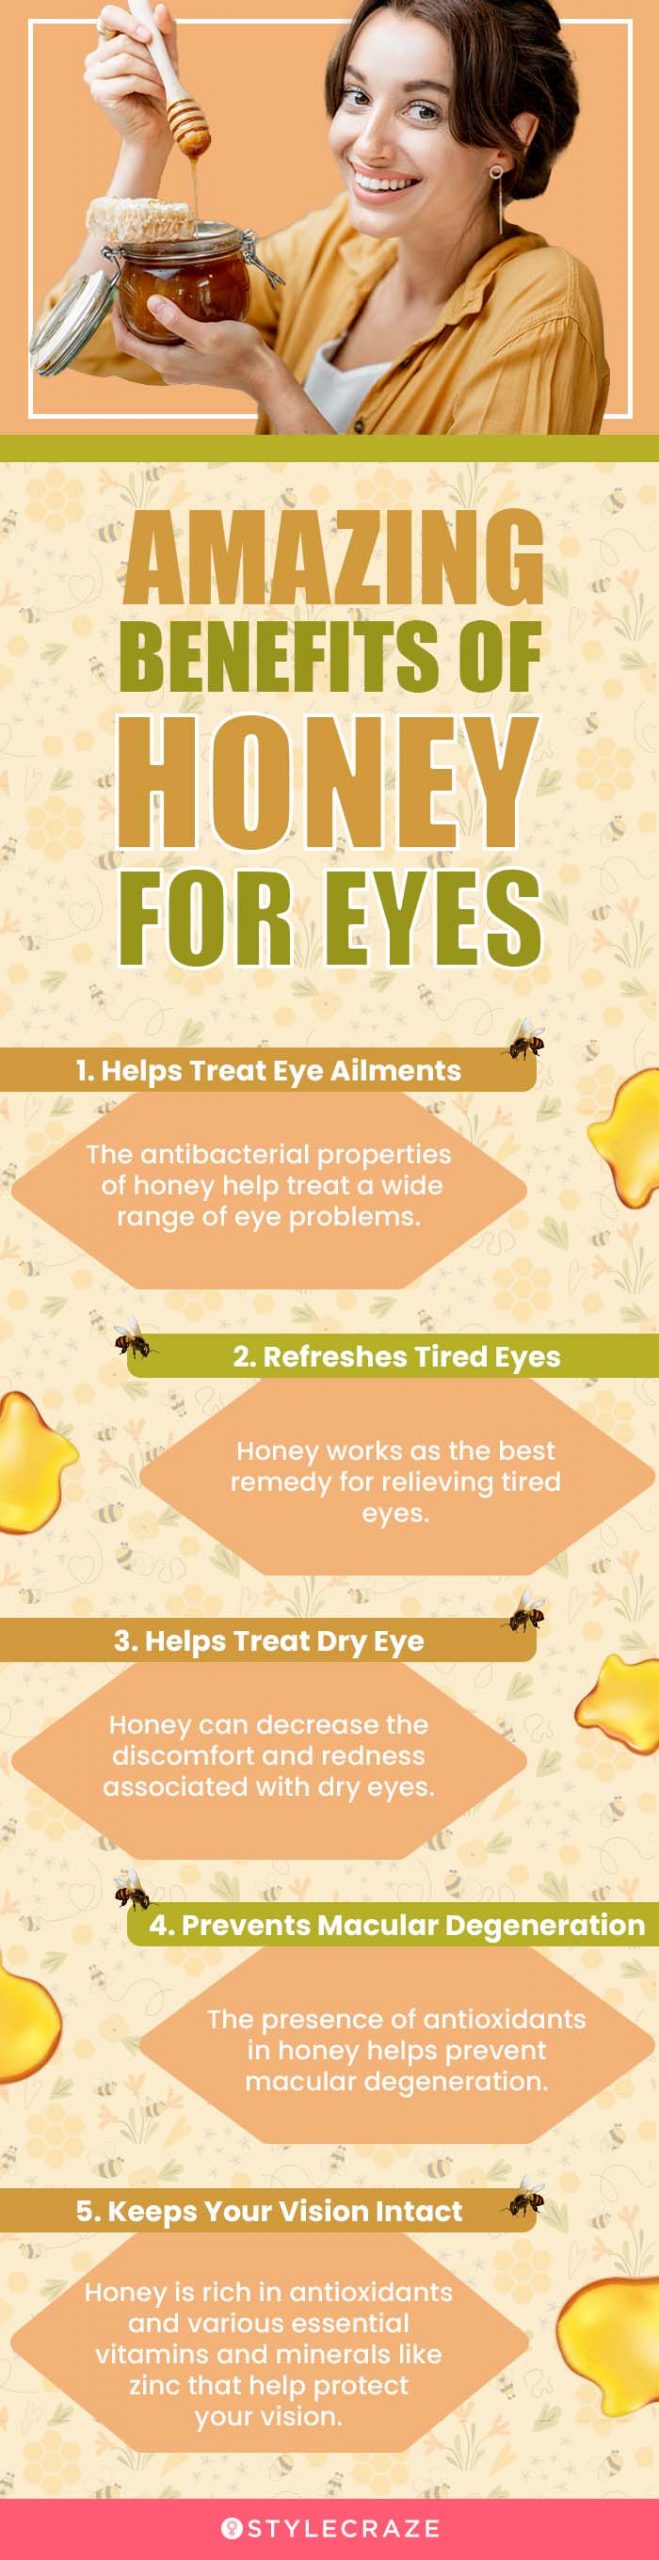 amazing benefits of honey for eyes [infographic]